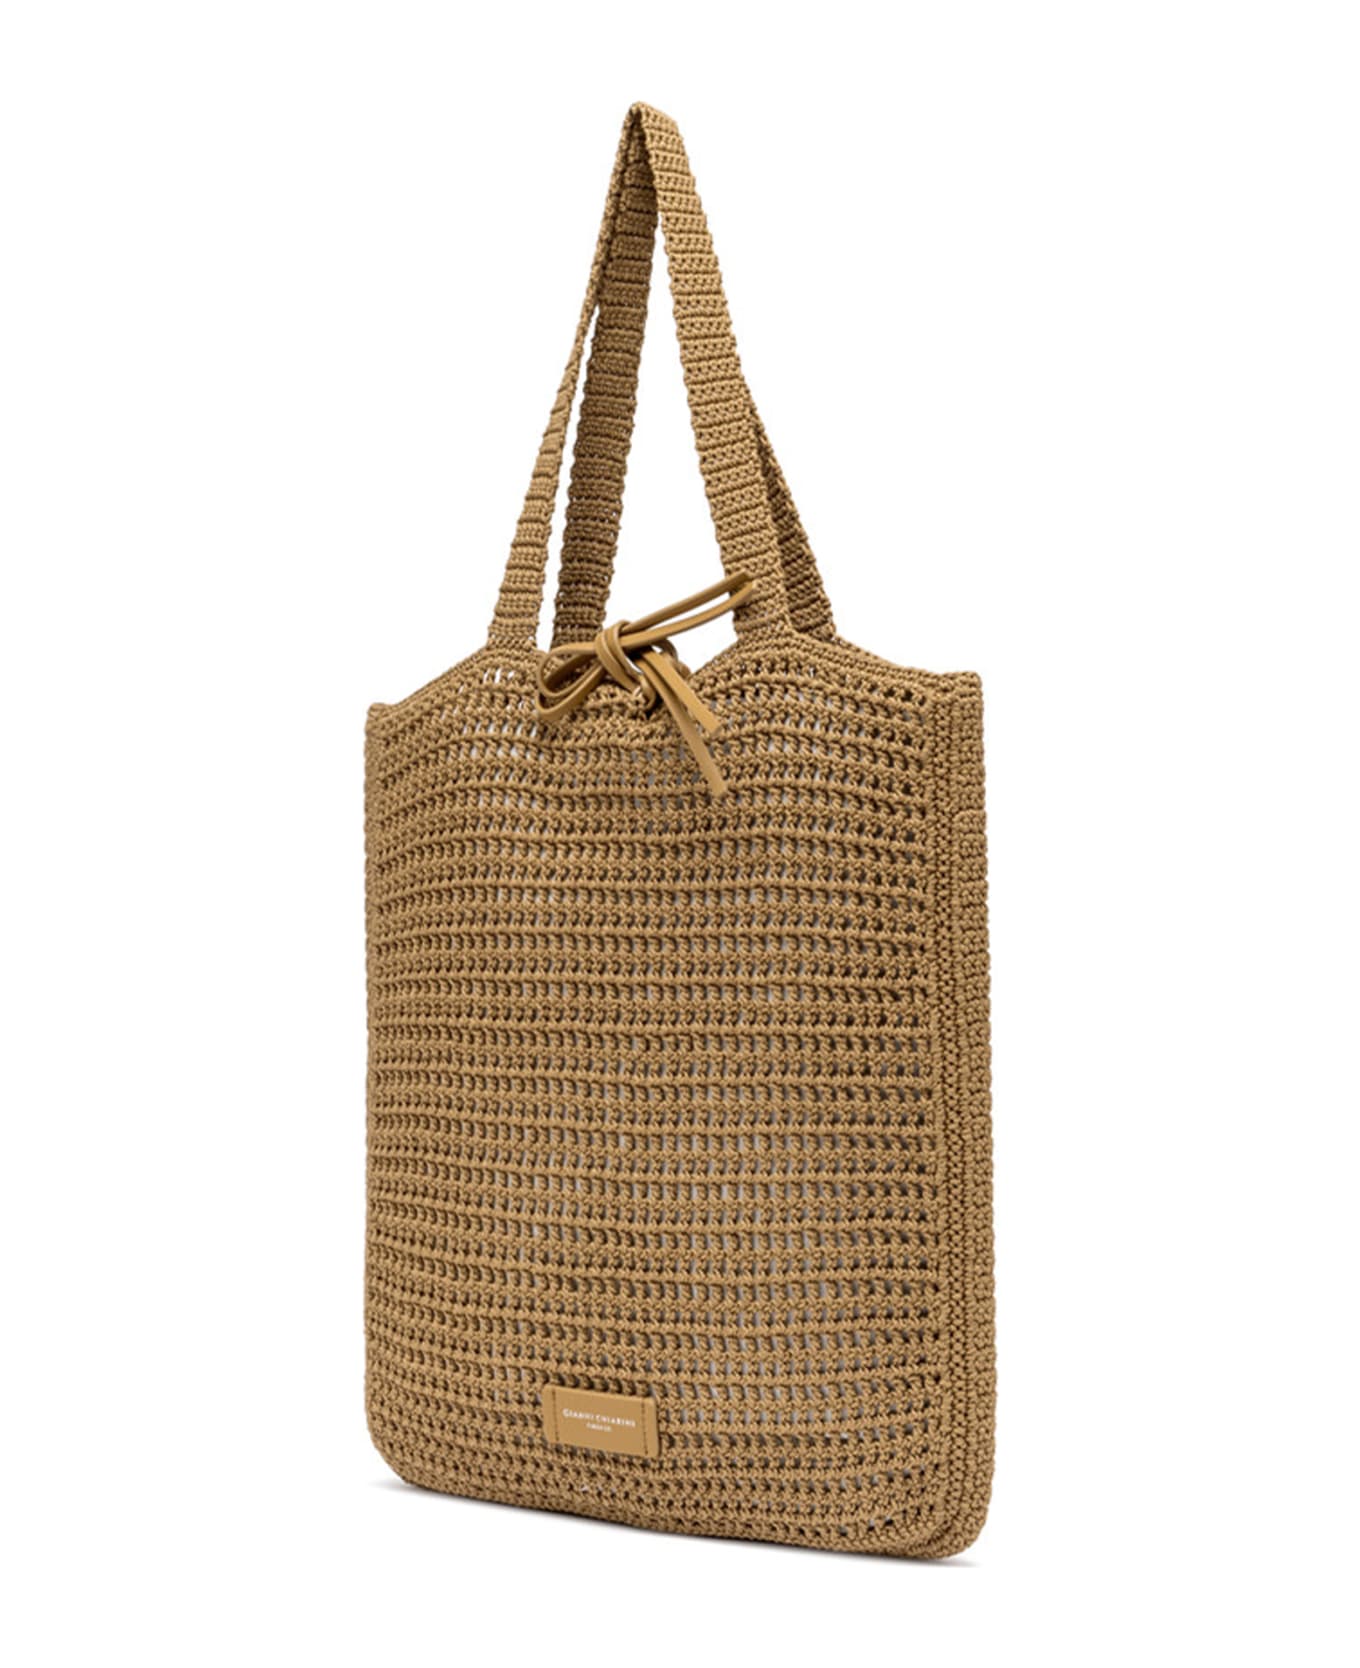 Gianni Chiarini Vittoria Camel Shopping Bag In Crochet Fabric - CAMEL